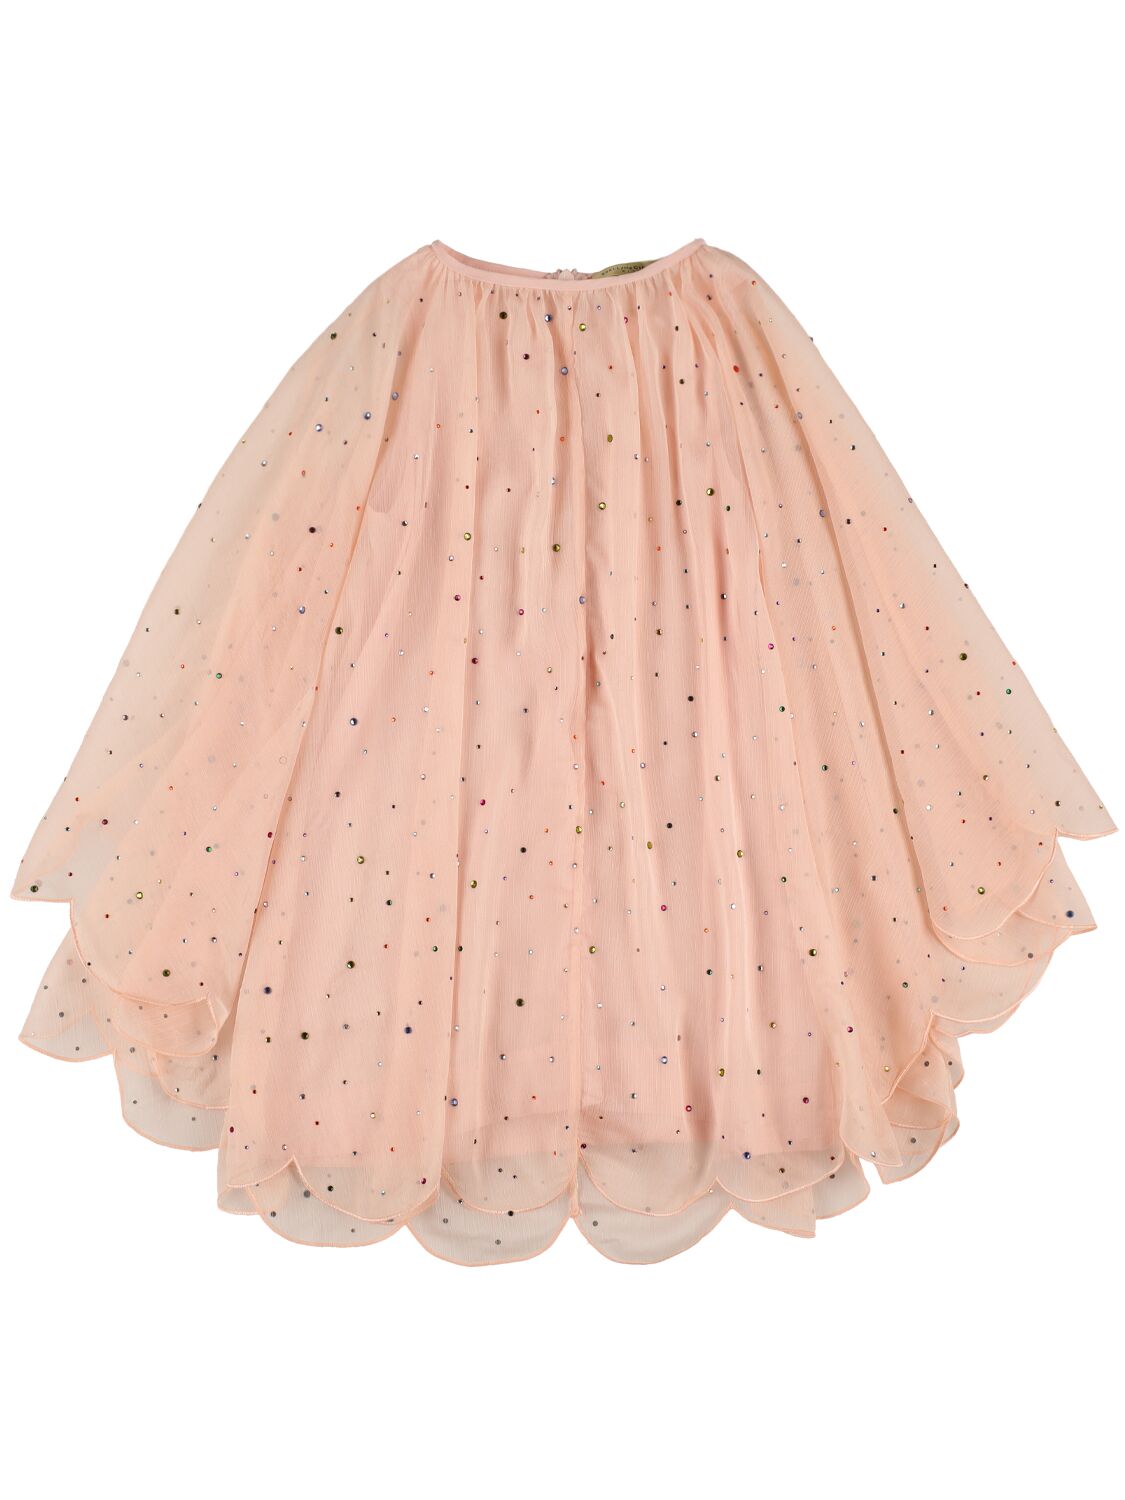 Image of Embellished Tulle Dress